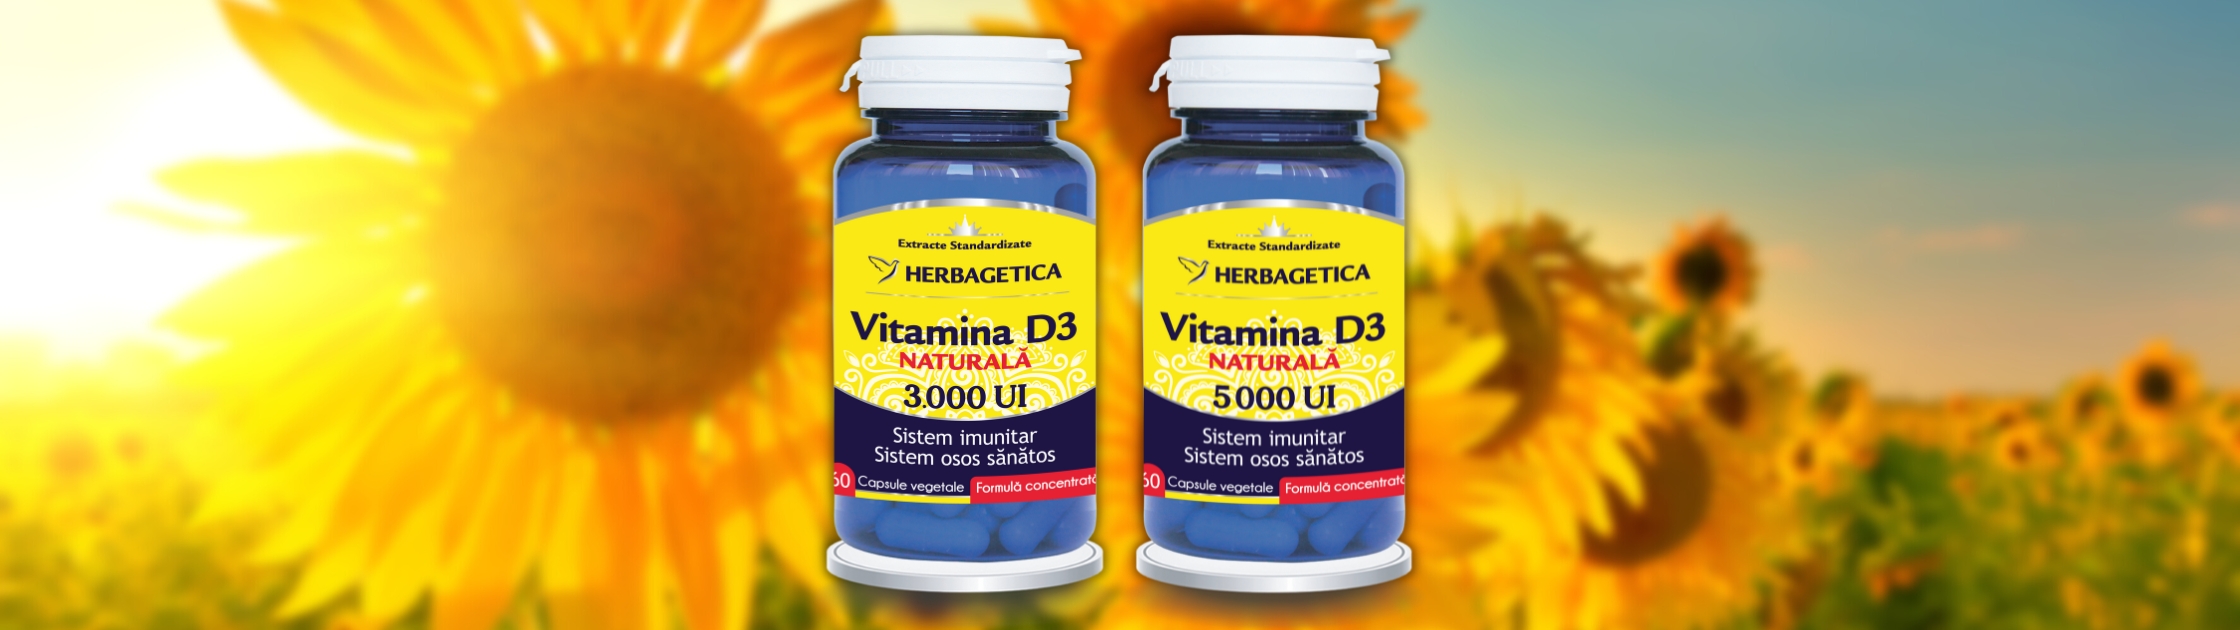 Beneficii vitamina D3